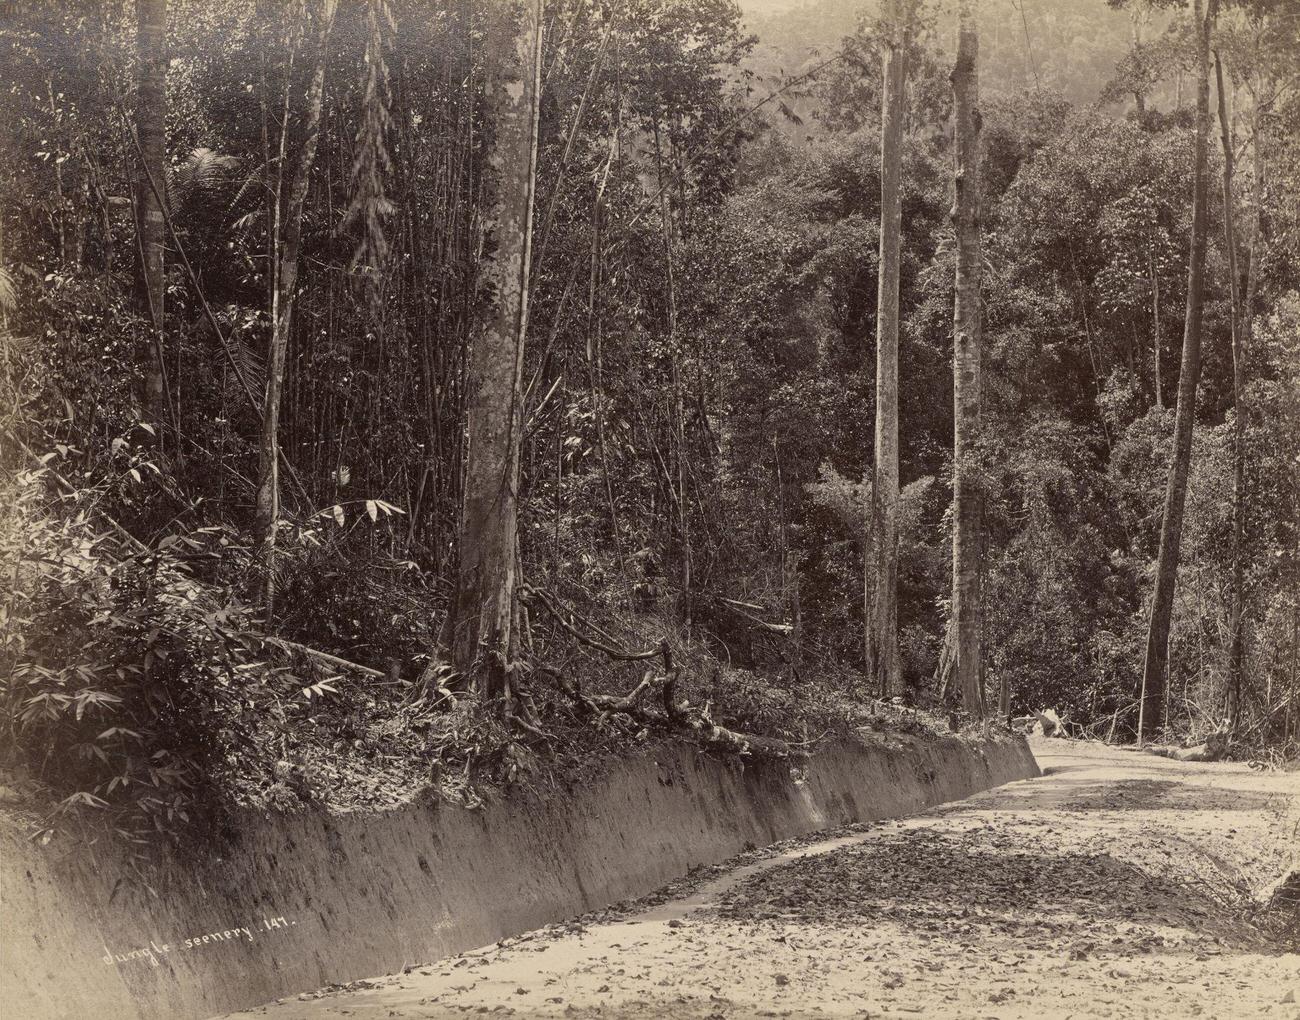 Malay Peninsula, 1870s